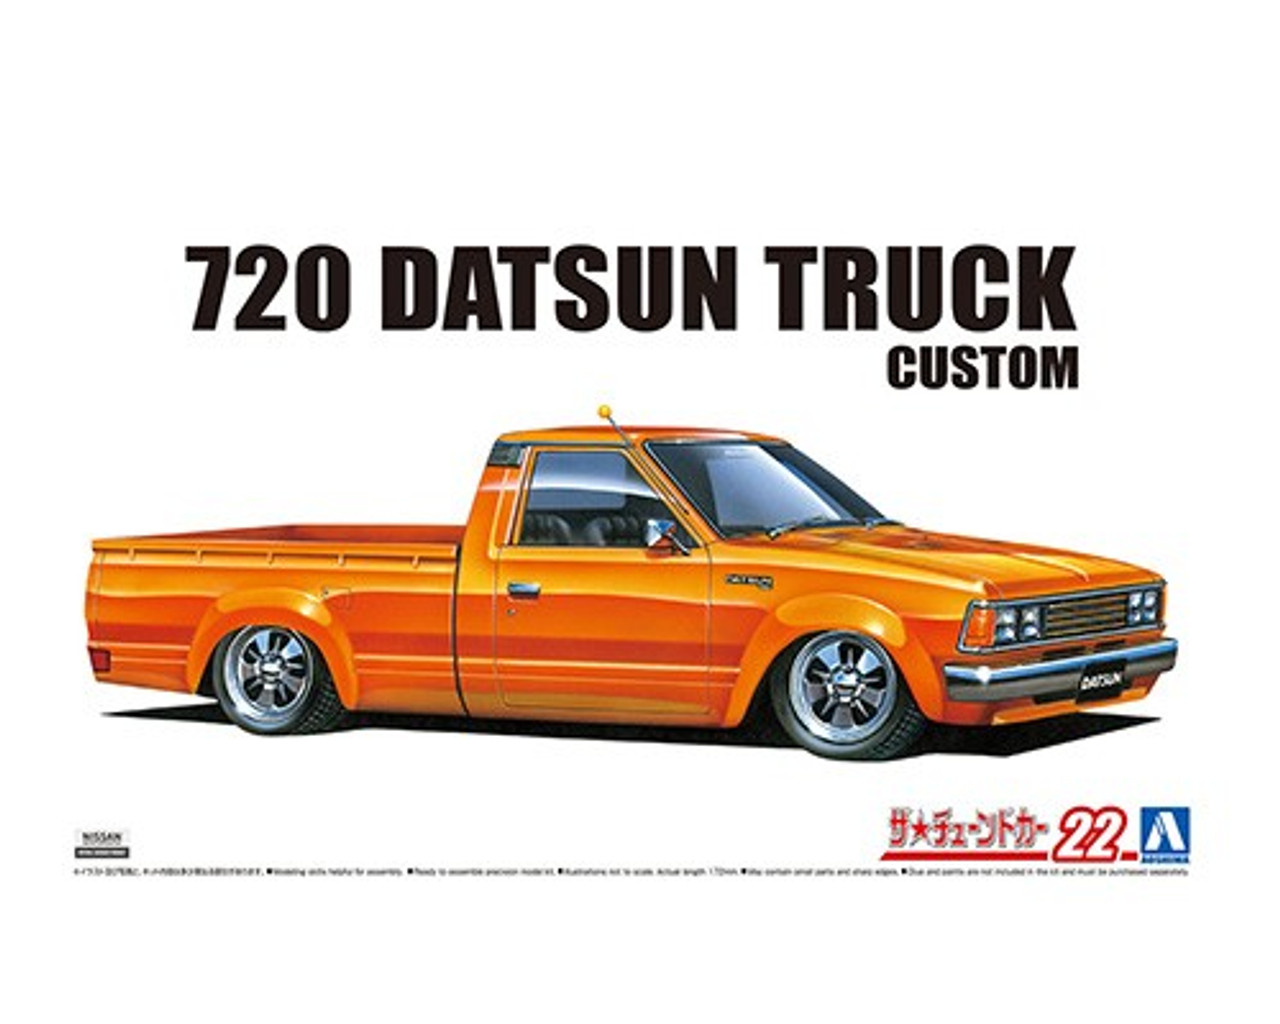 1/24 Datsun Truck Custom '82 Nissan - AOS05840